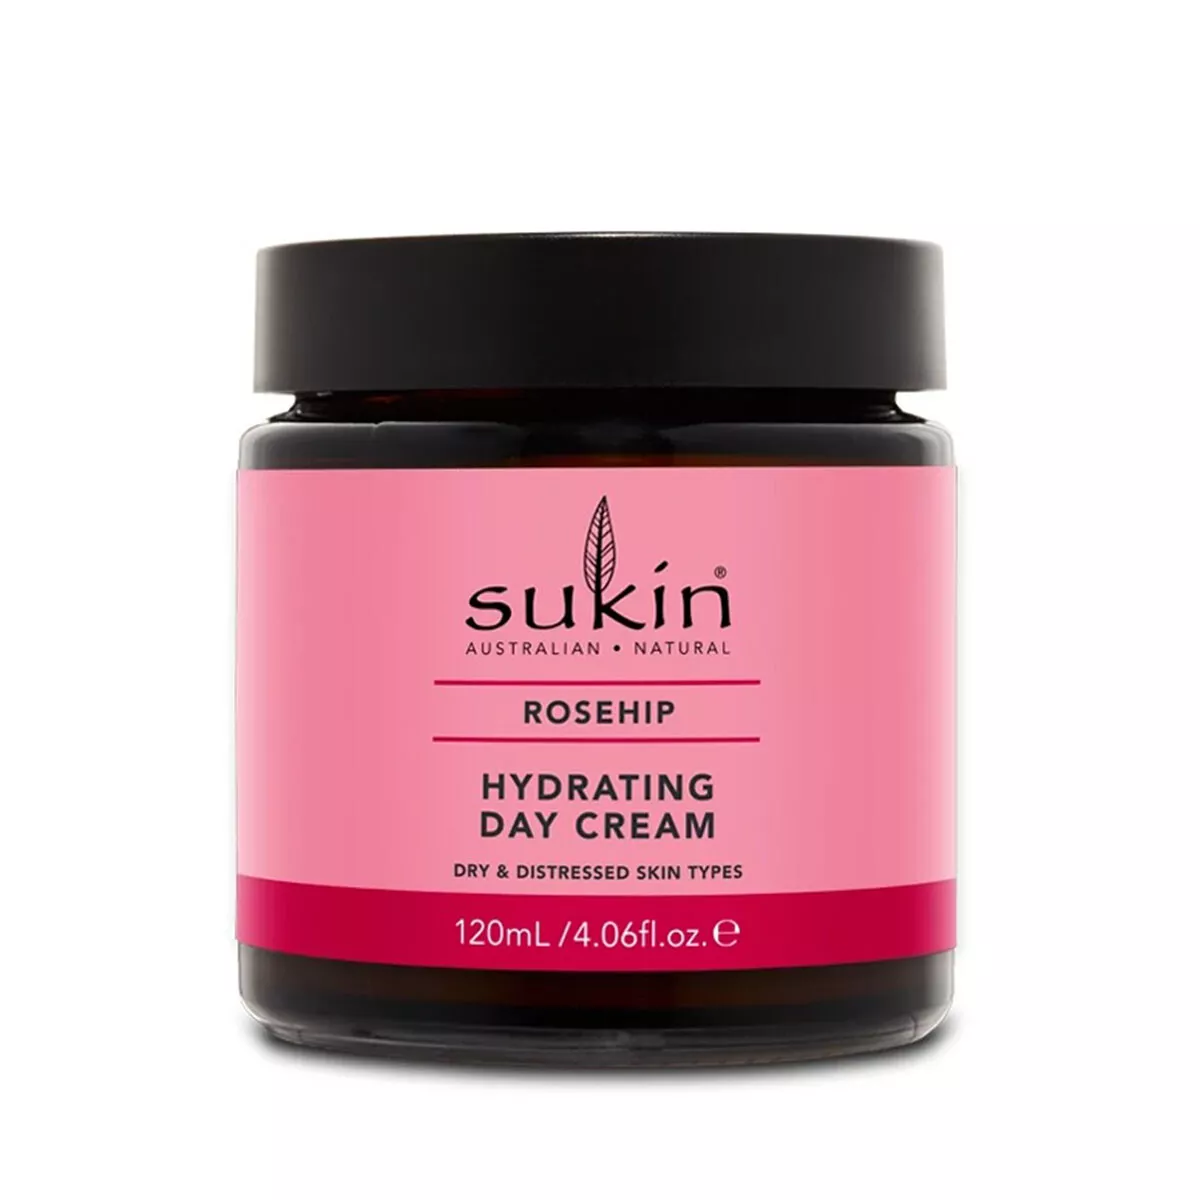 Sukin - Rose Hip Hydrating Day Cream (120ml)